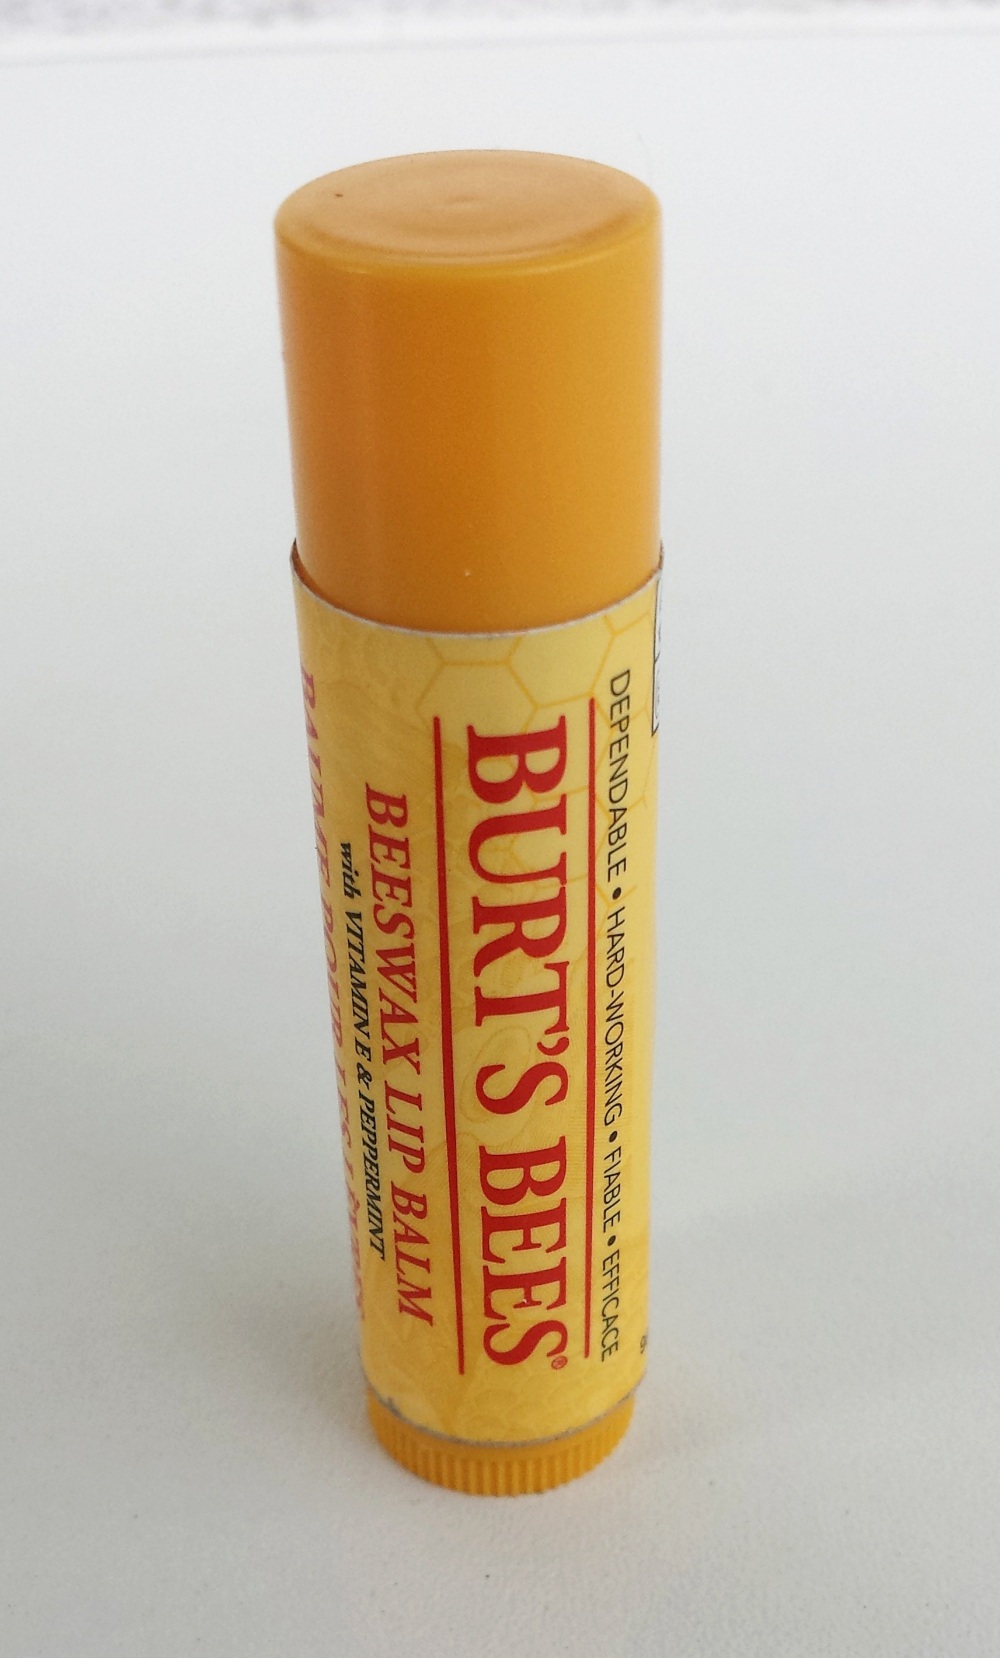 Burt's Bees Beeswax Lip Balm - 100% Natural Lip Balm (the outside)